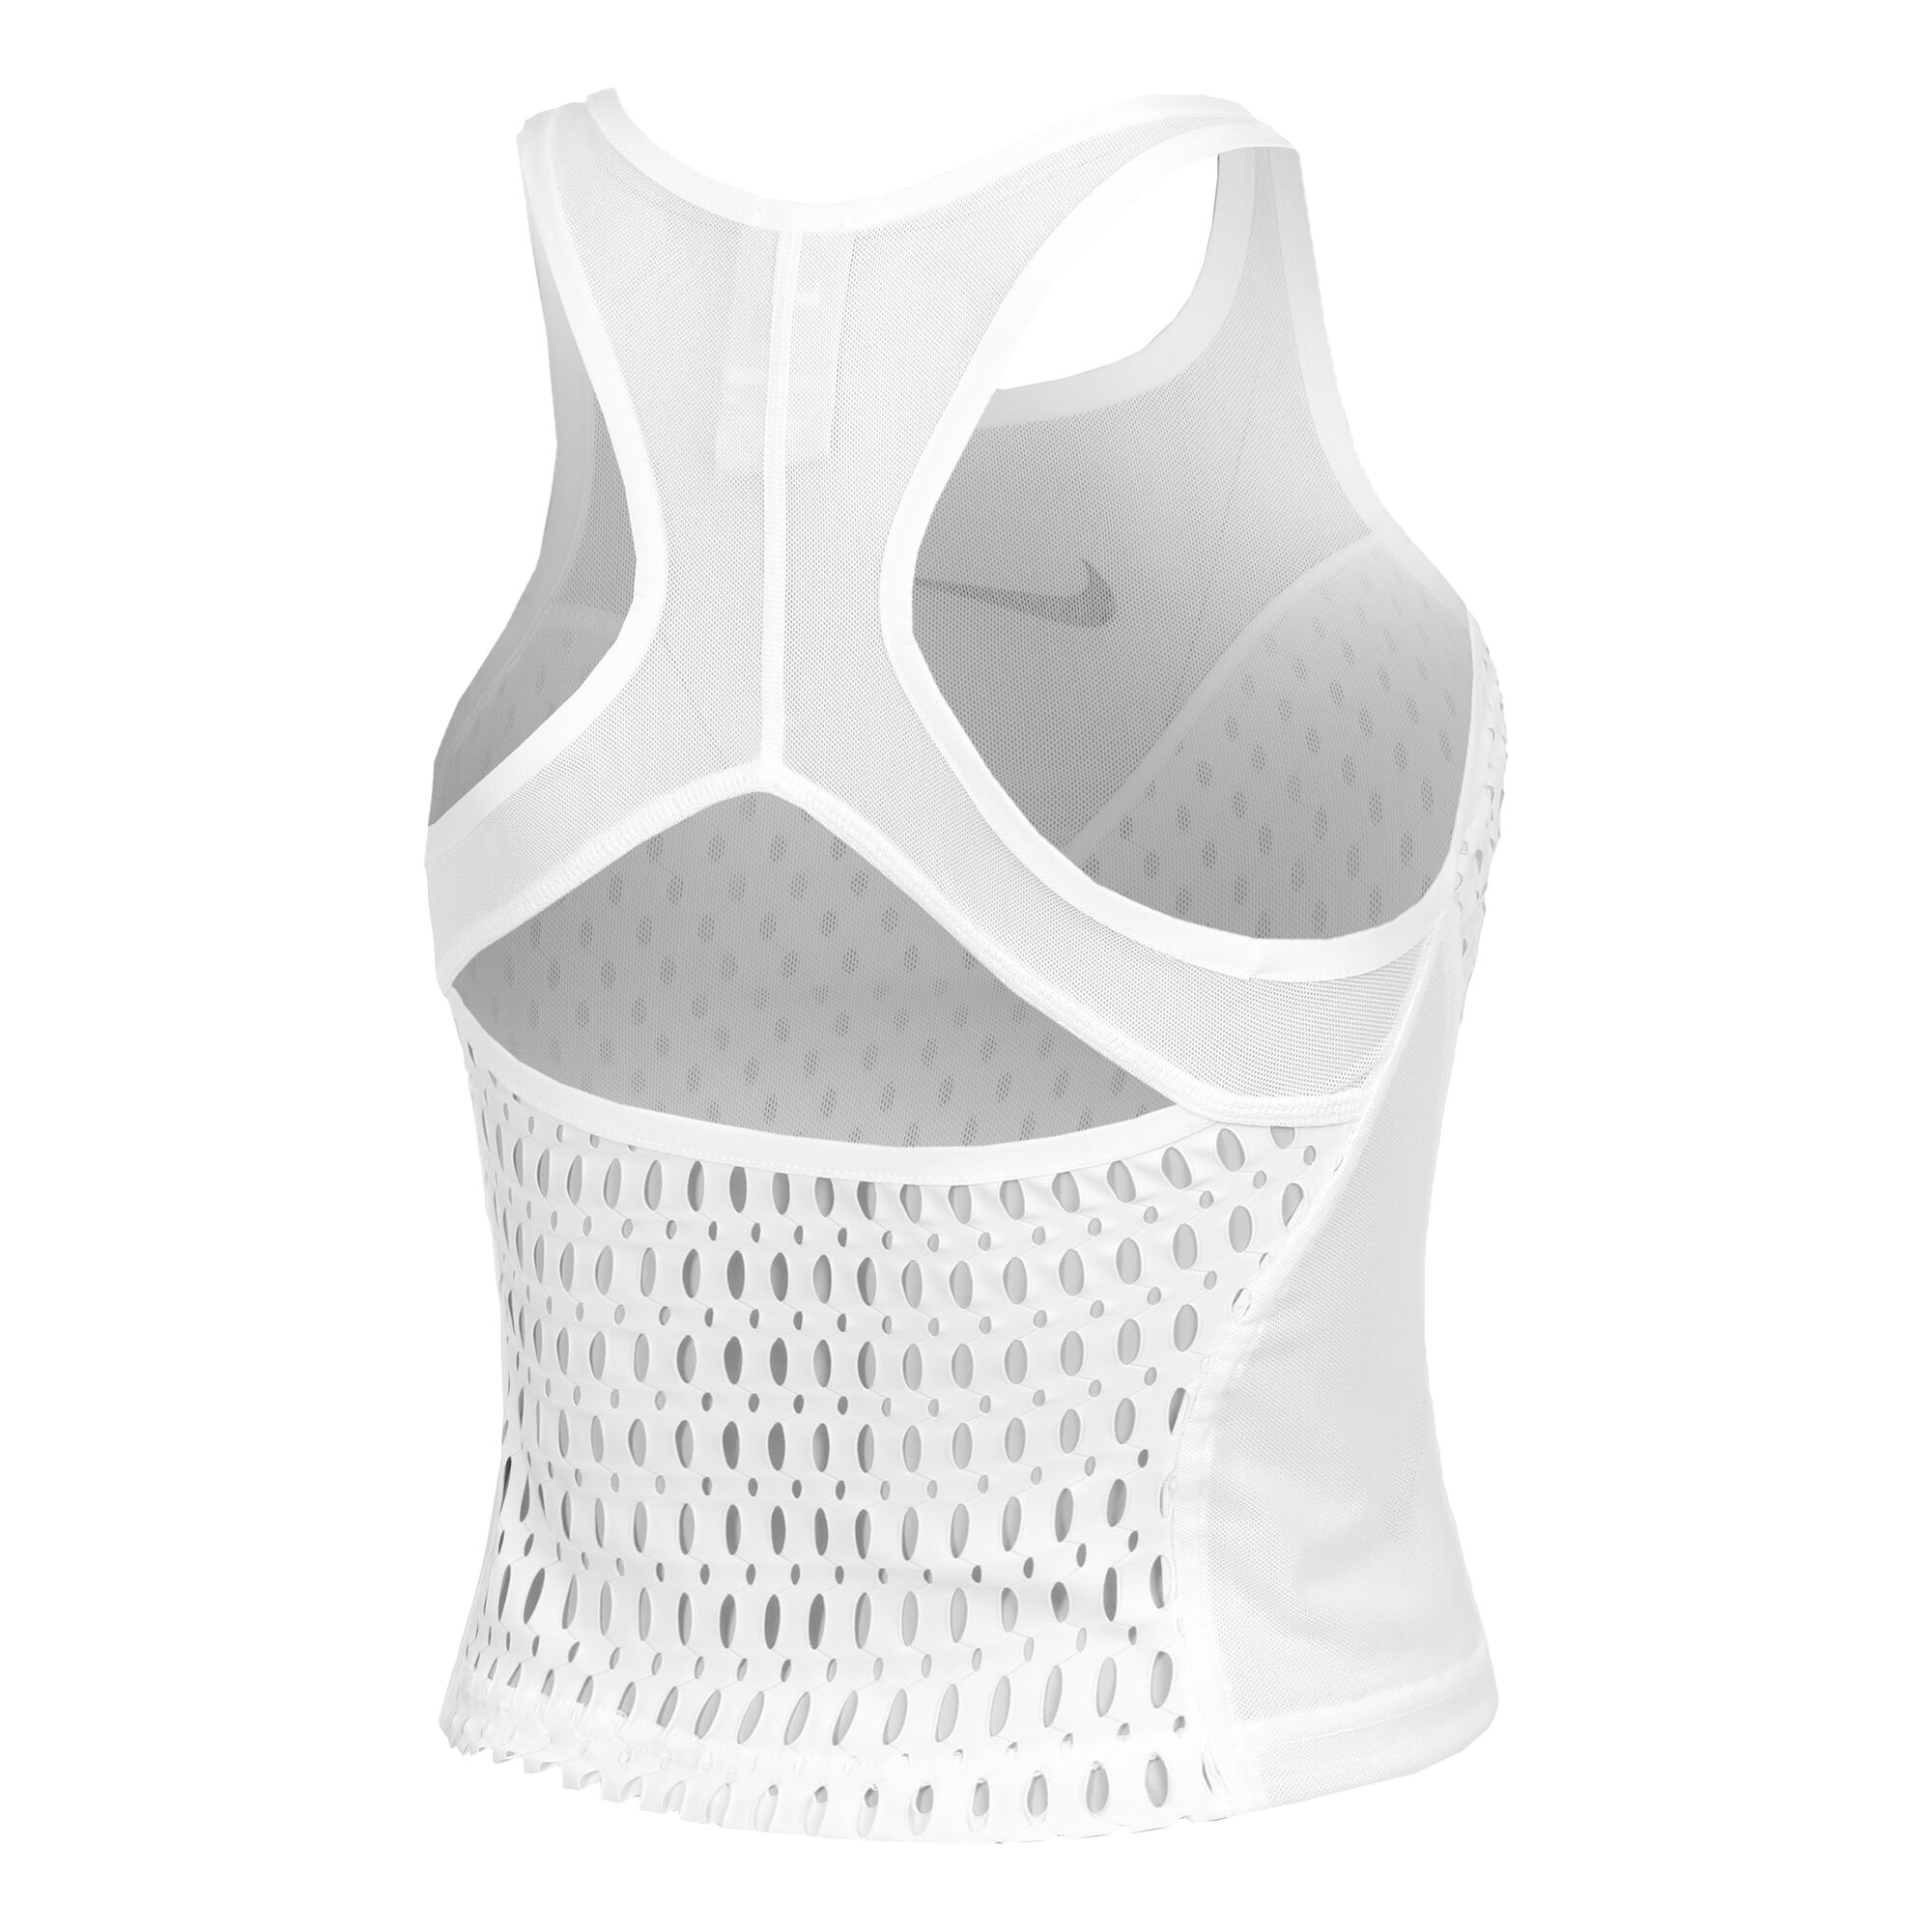 Women's top Nike Dri-Fit One Slim Tank - polar/white, Tennis Zone